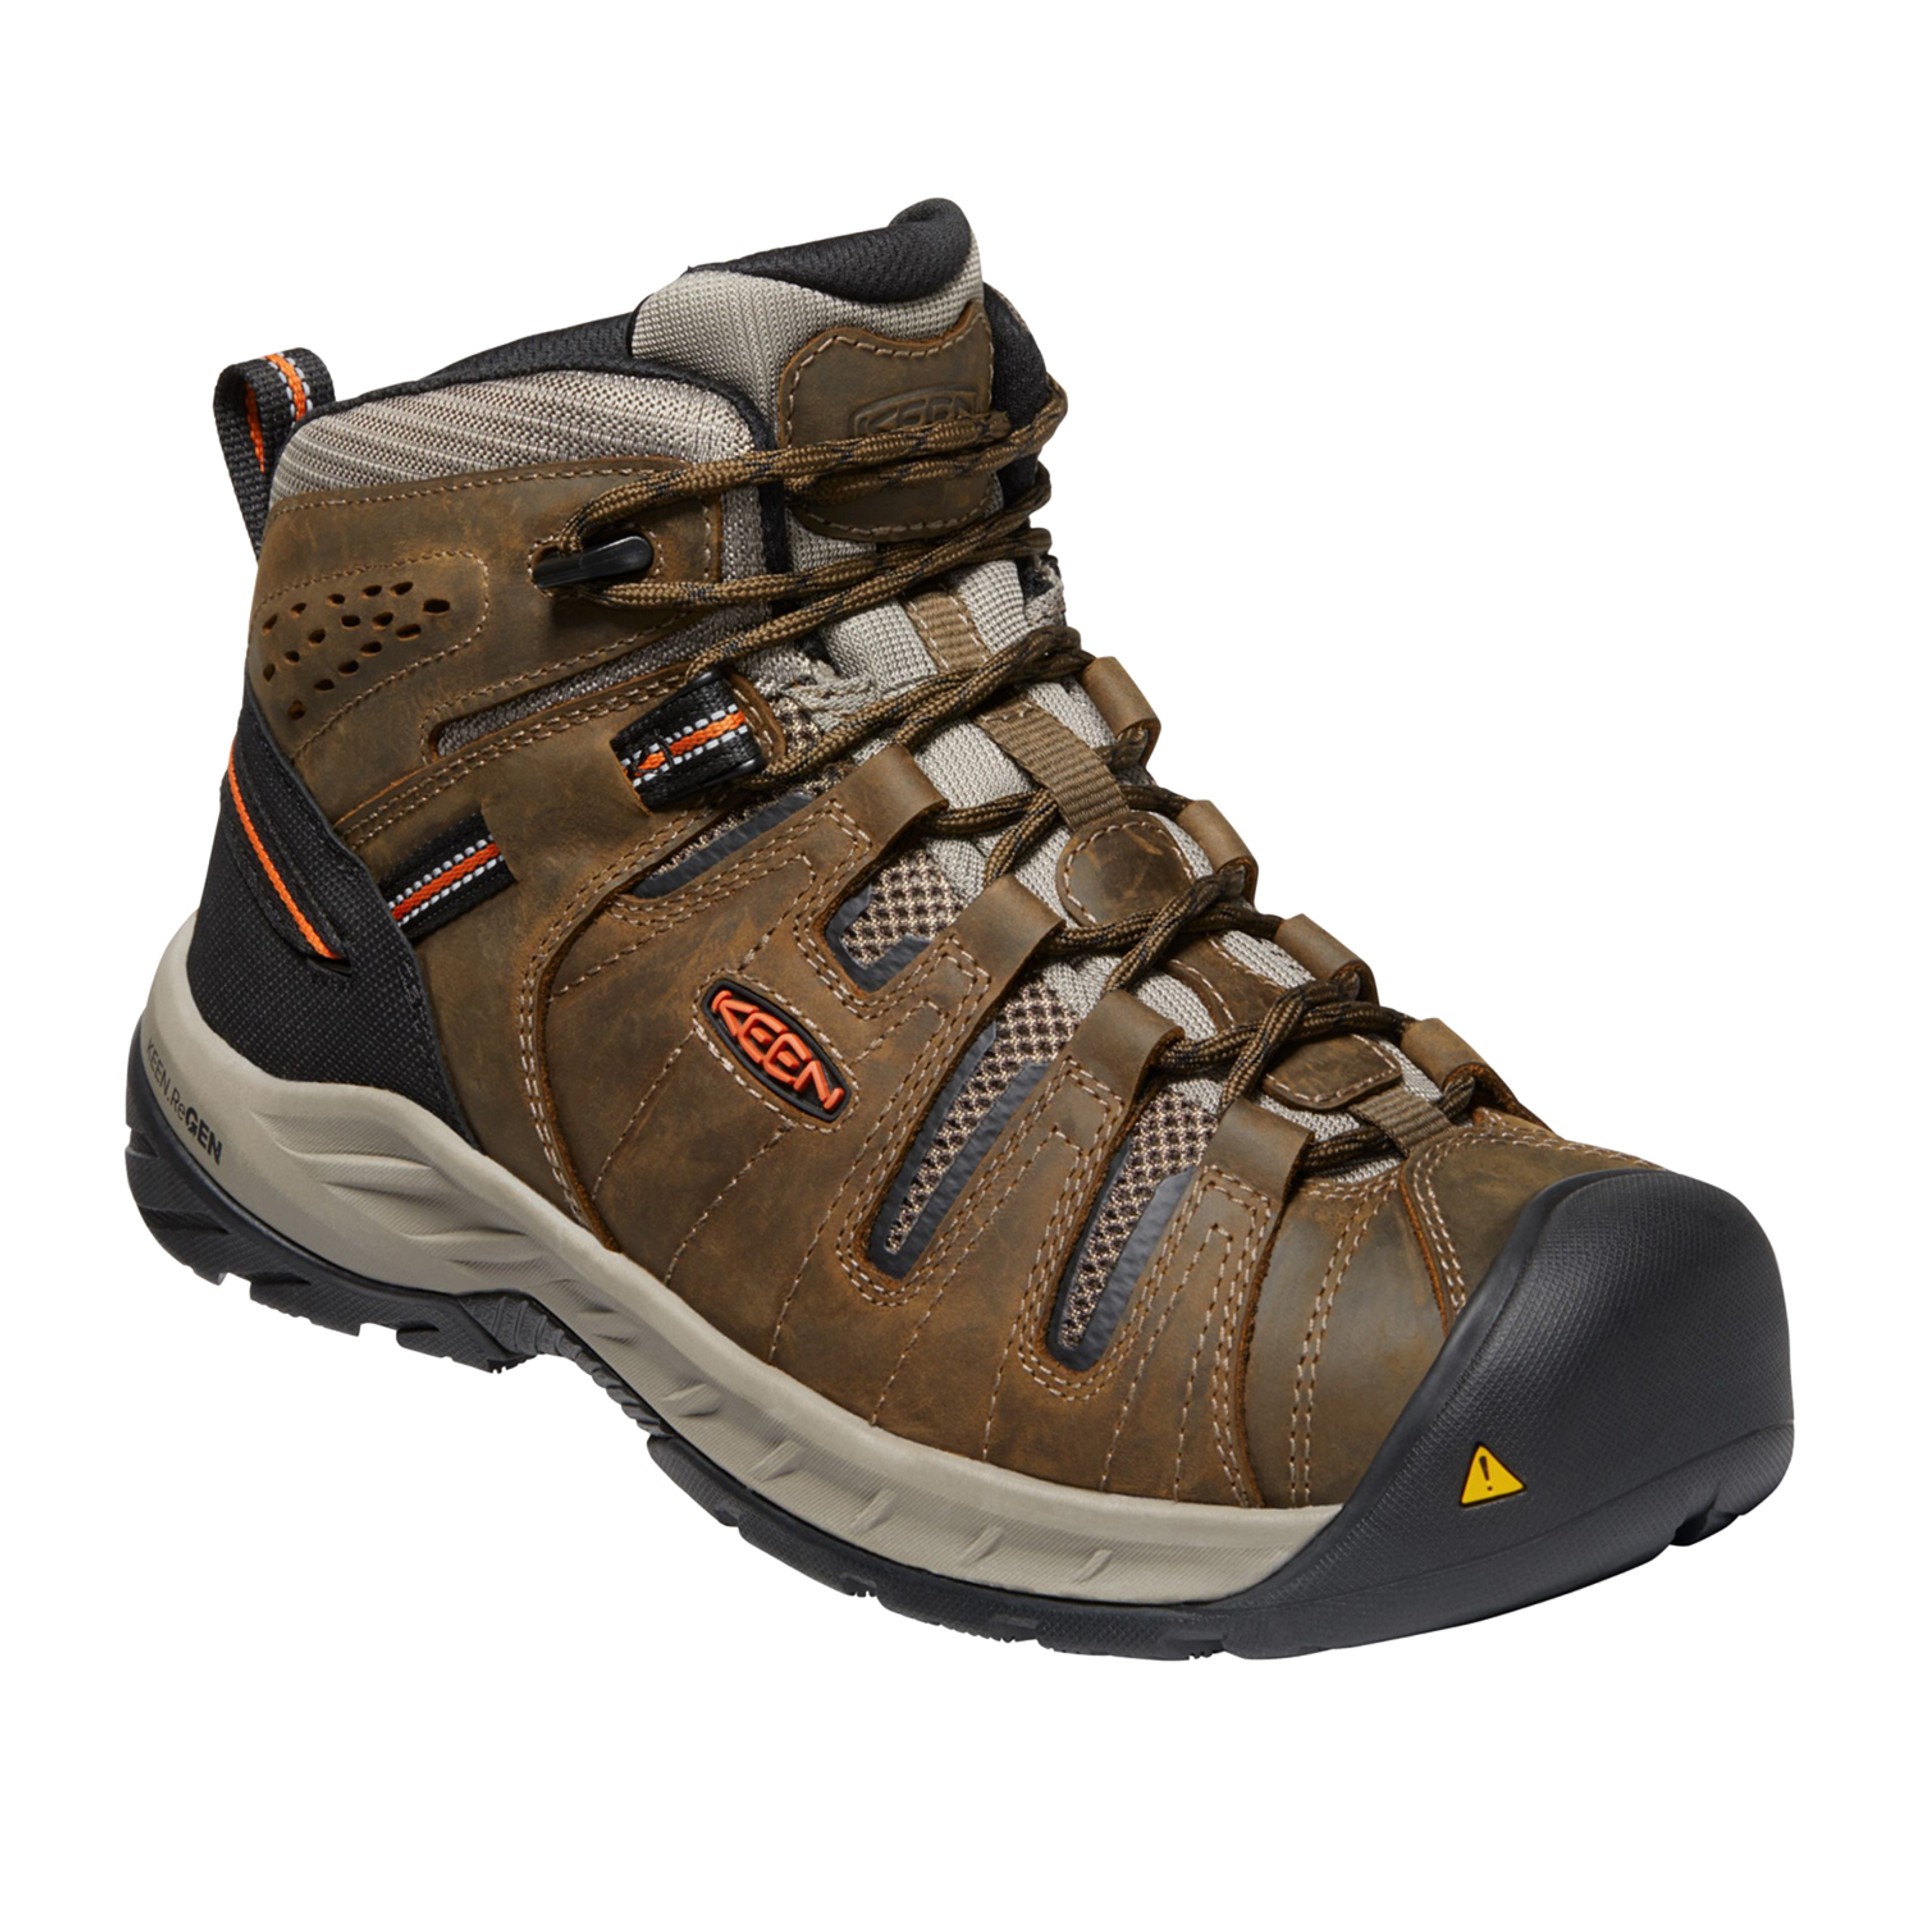 KEEN Targhee II #1002375 Men's Mid Waterproof Hiking Boot